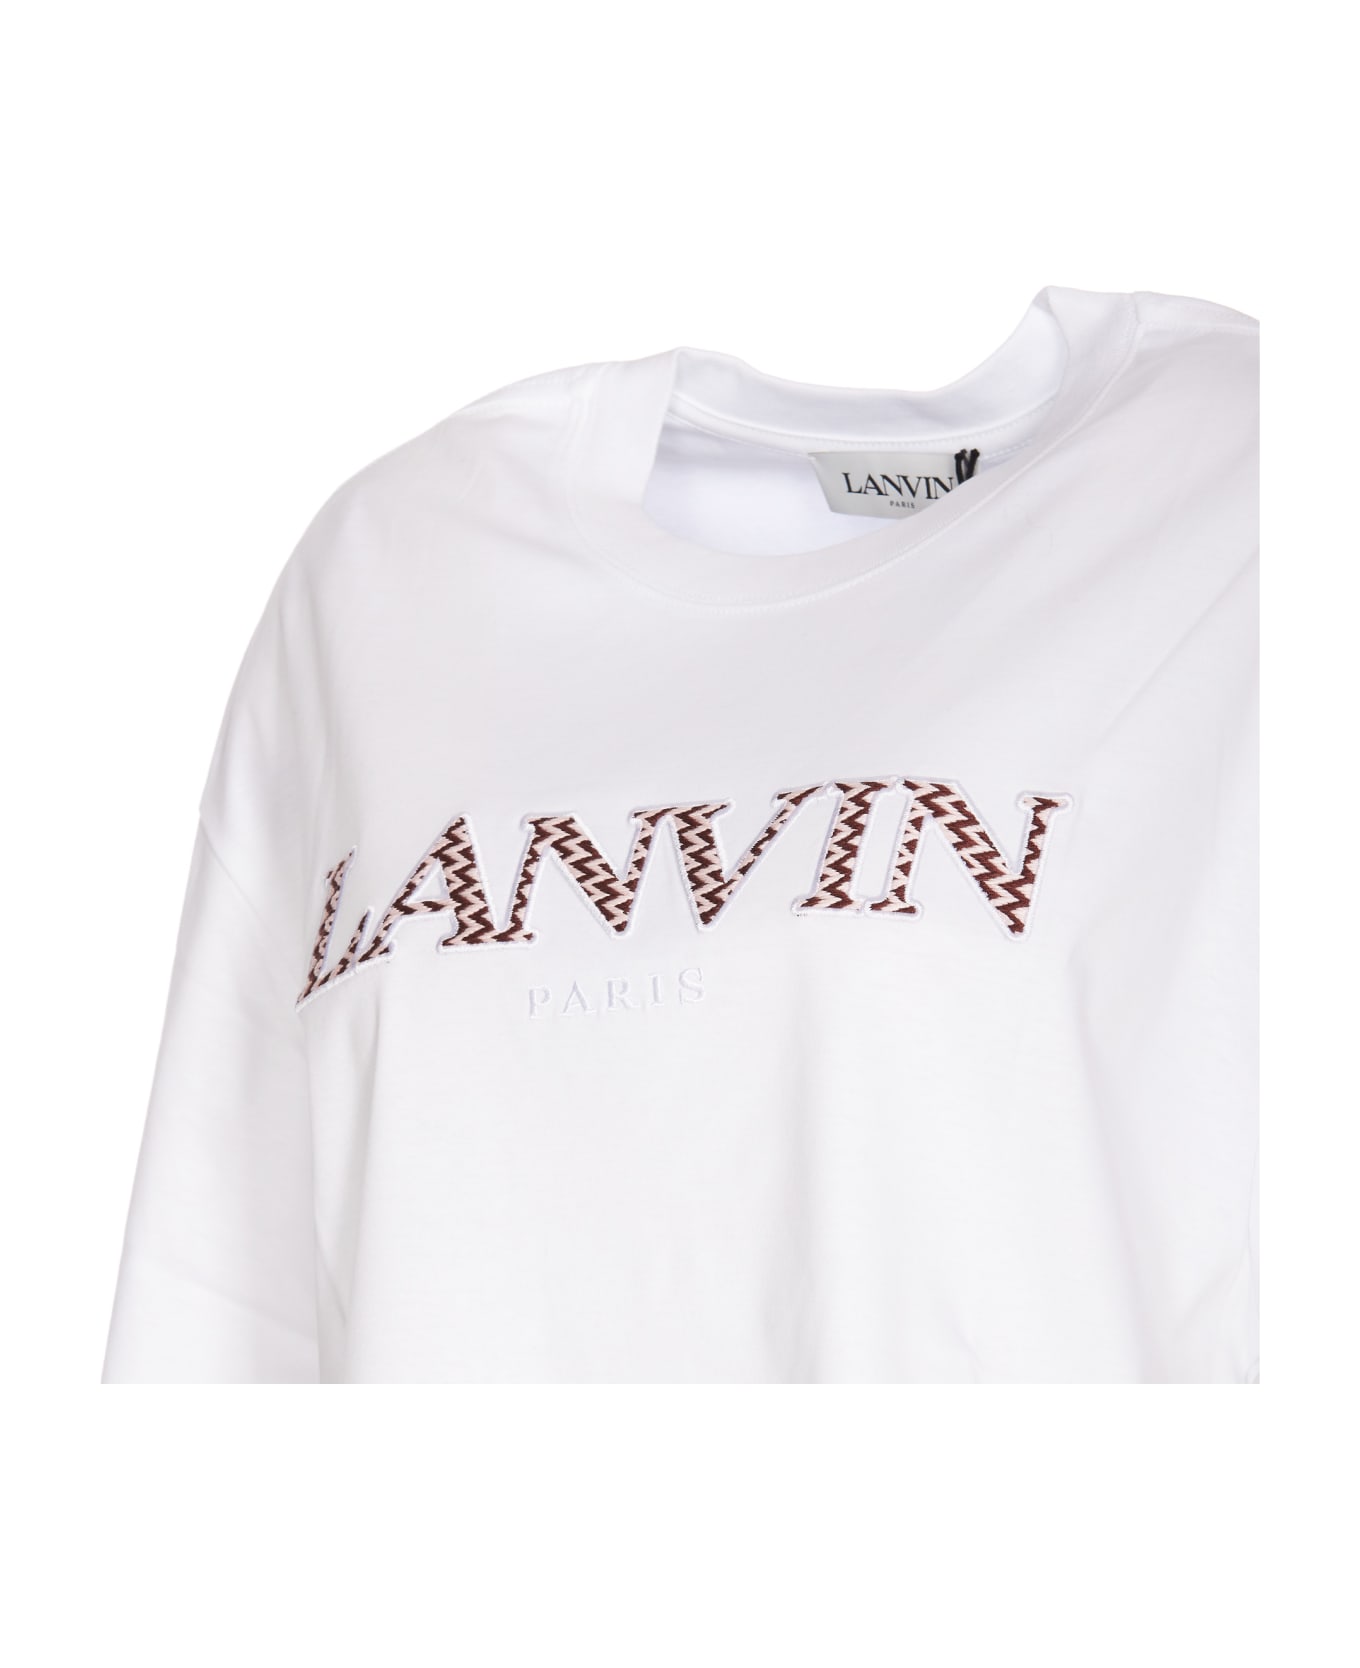 Lanvin Curb T-shirt - White Tシャツ